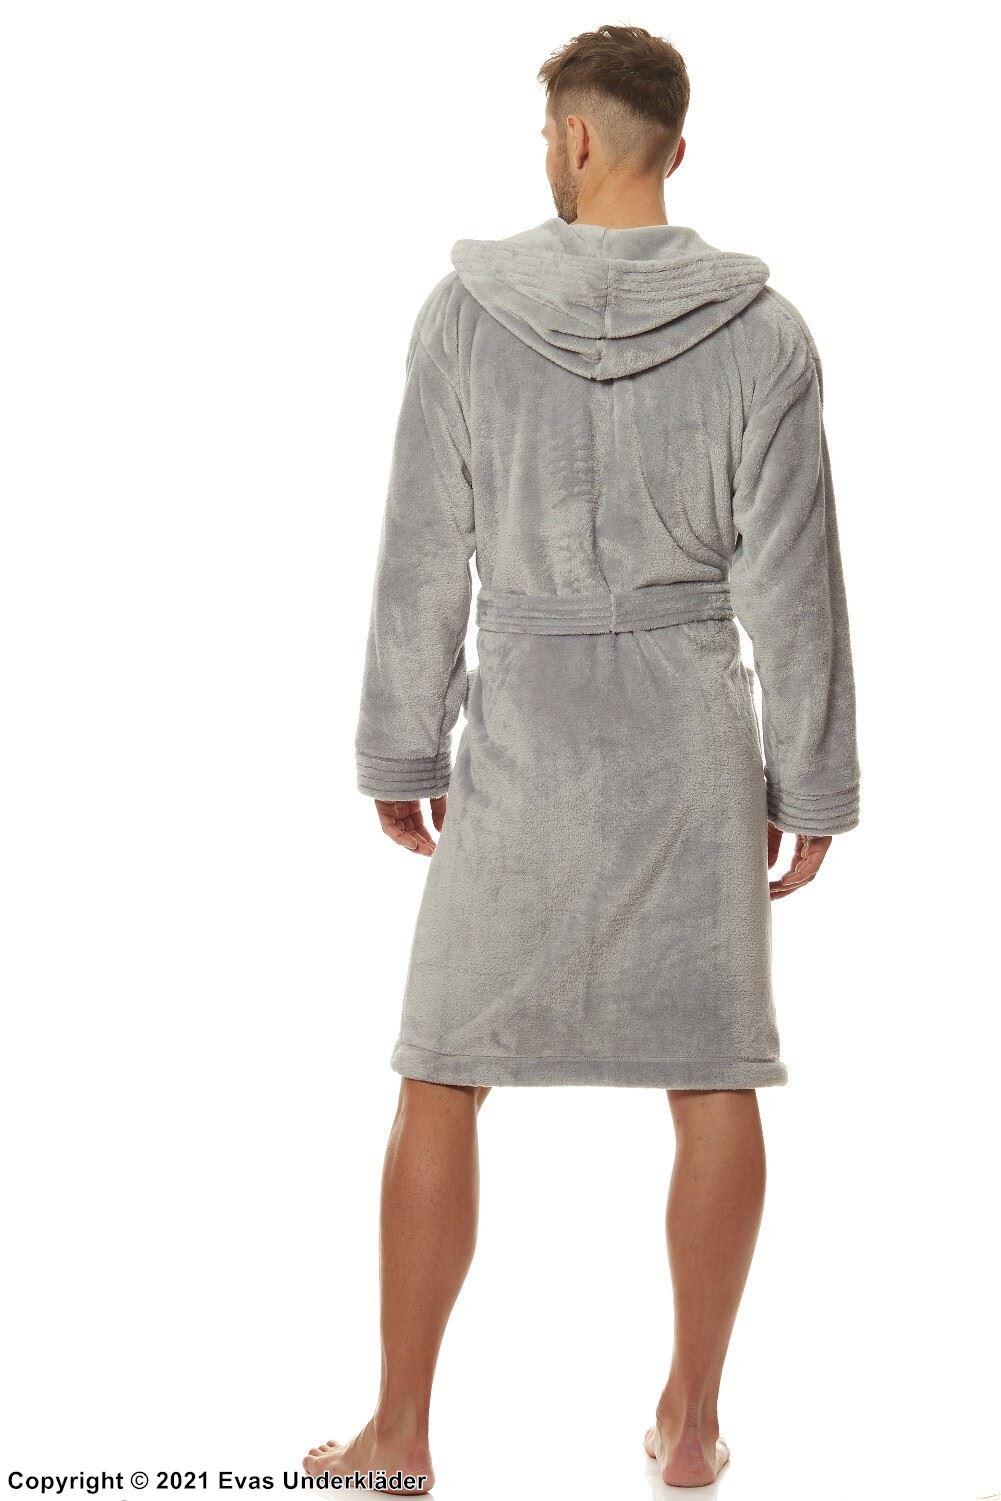 Men's bathrobe, terrycloth, long sleeves, pockets, hood